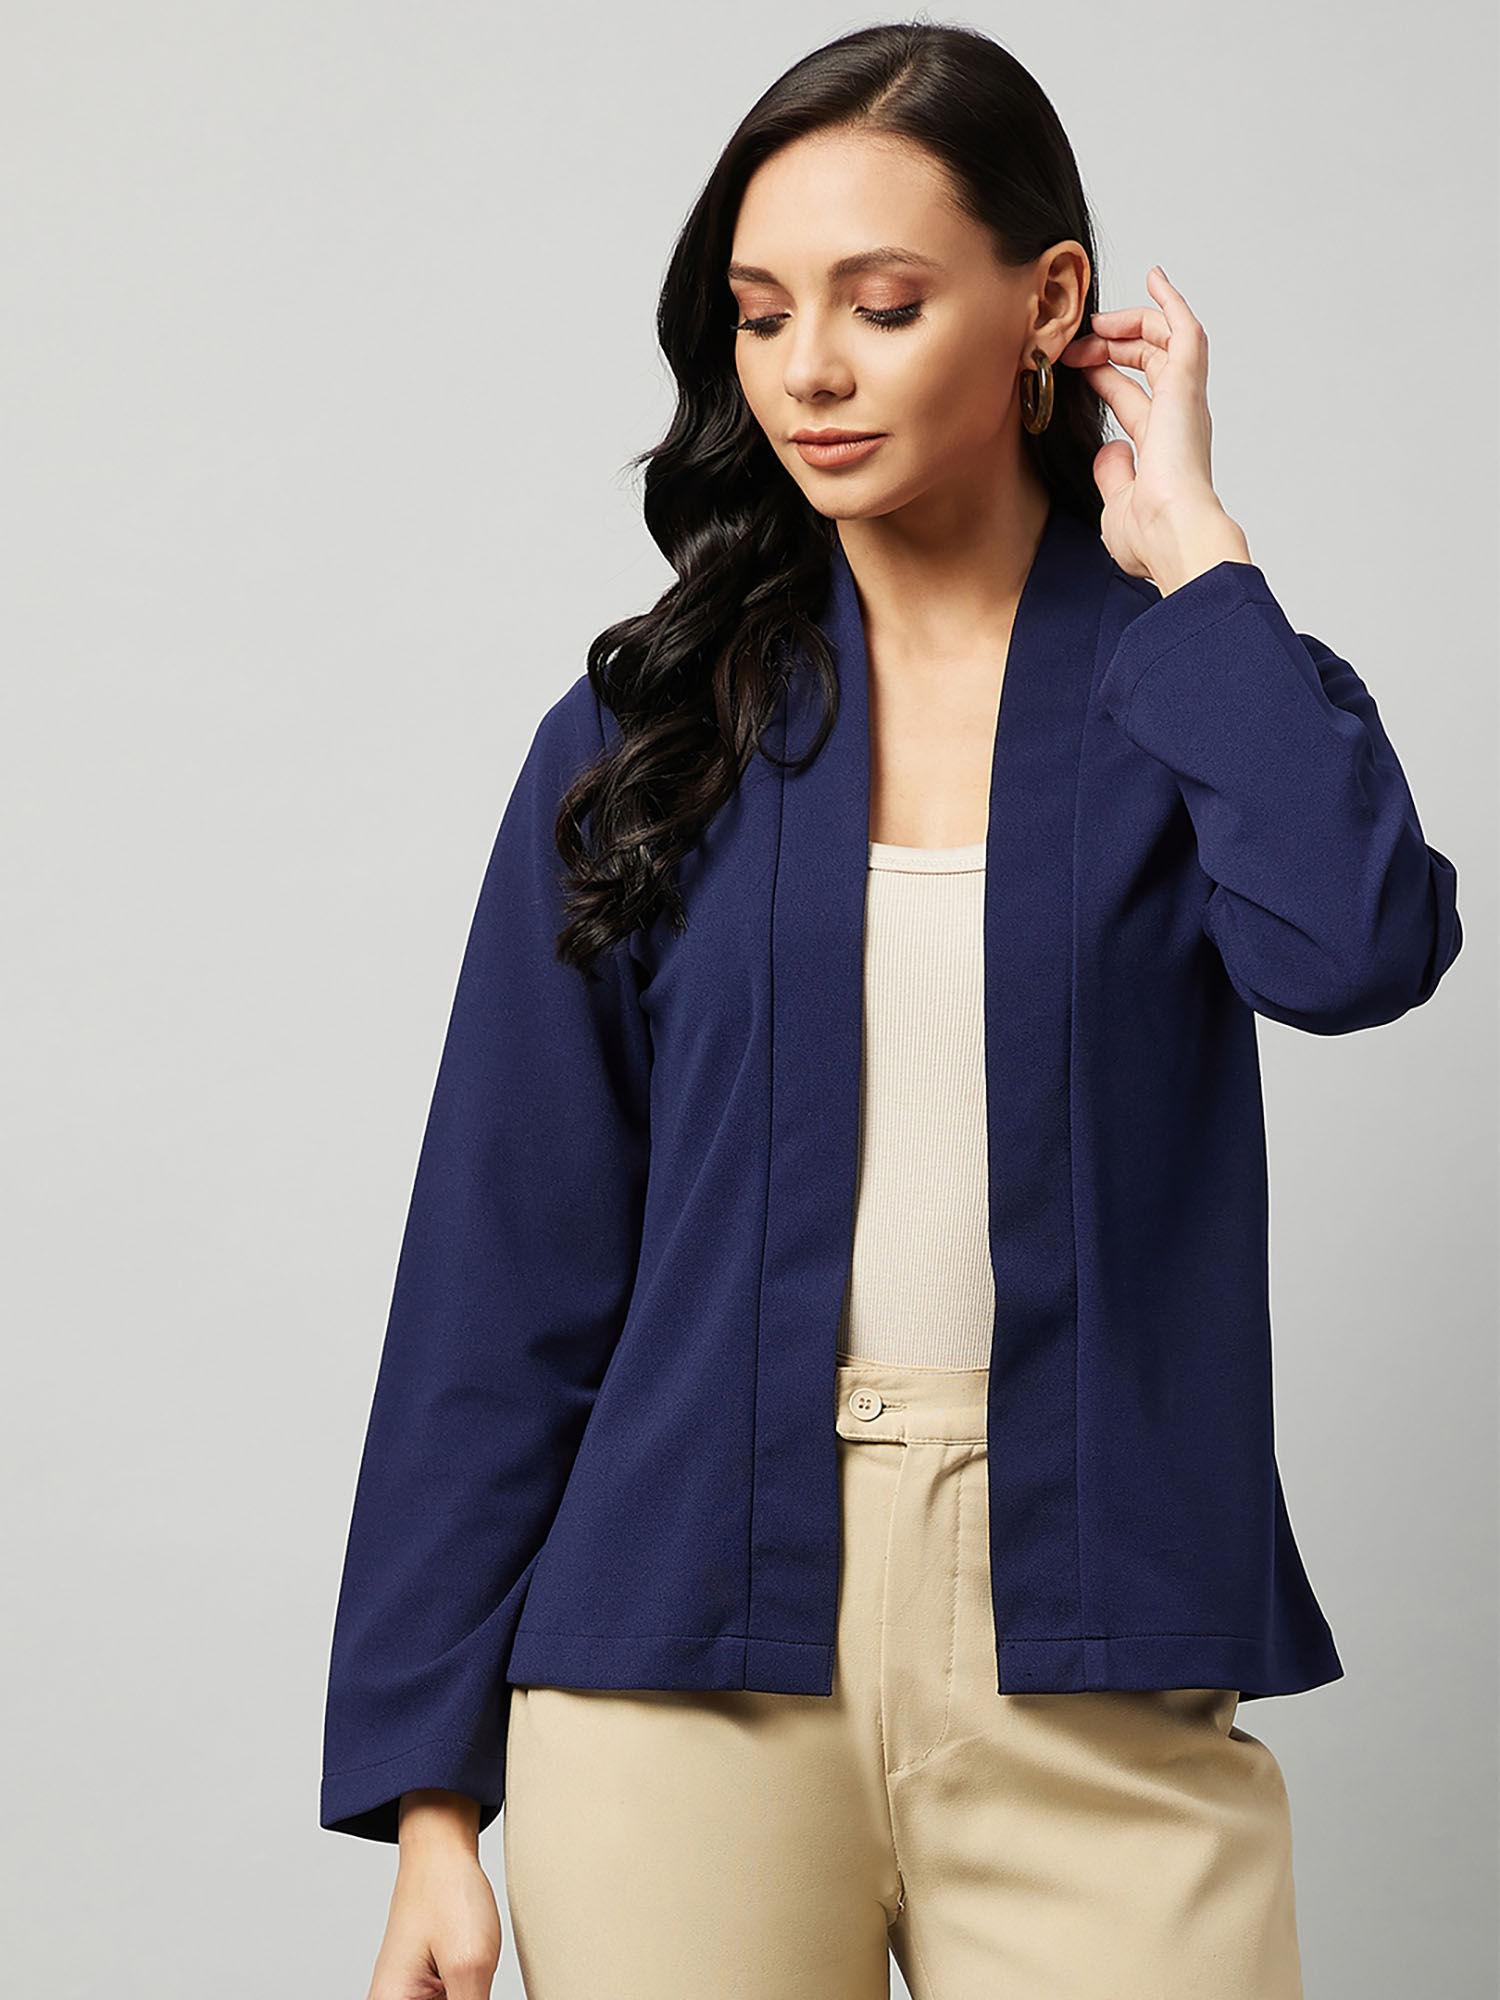 women casual navy blue long sleeves regular open front shrug